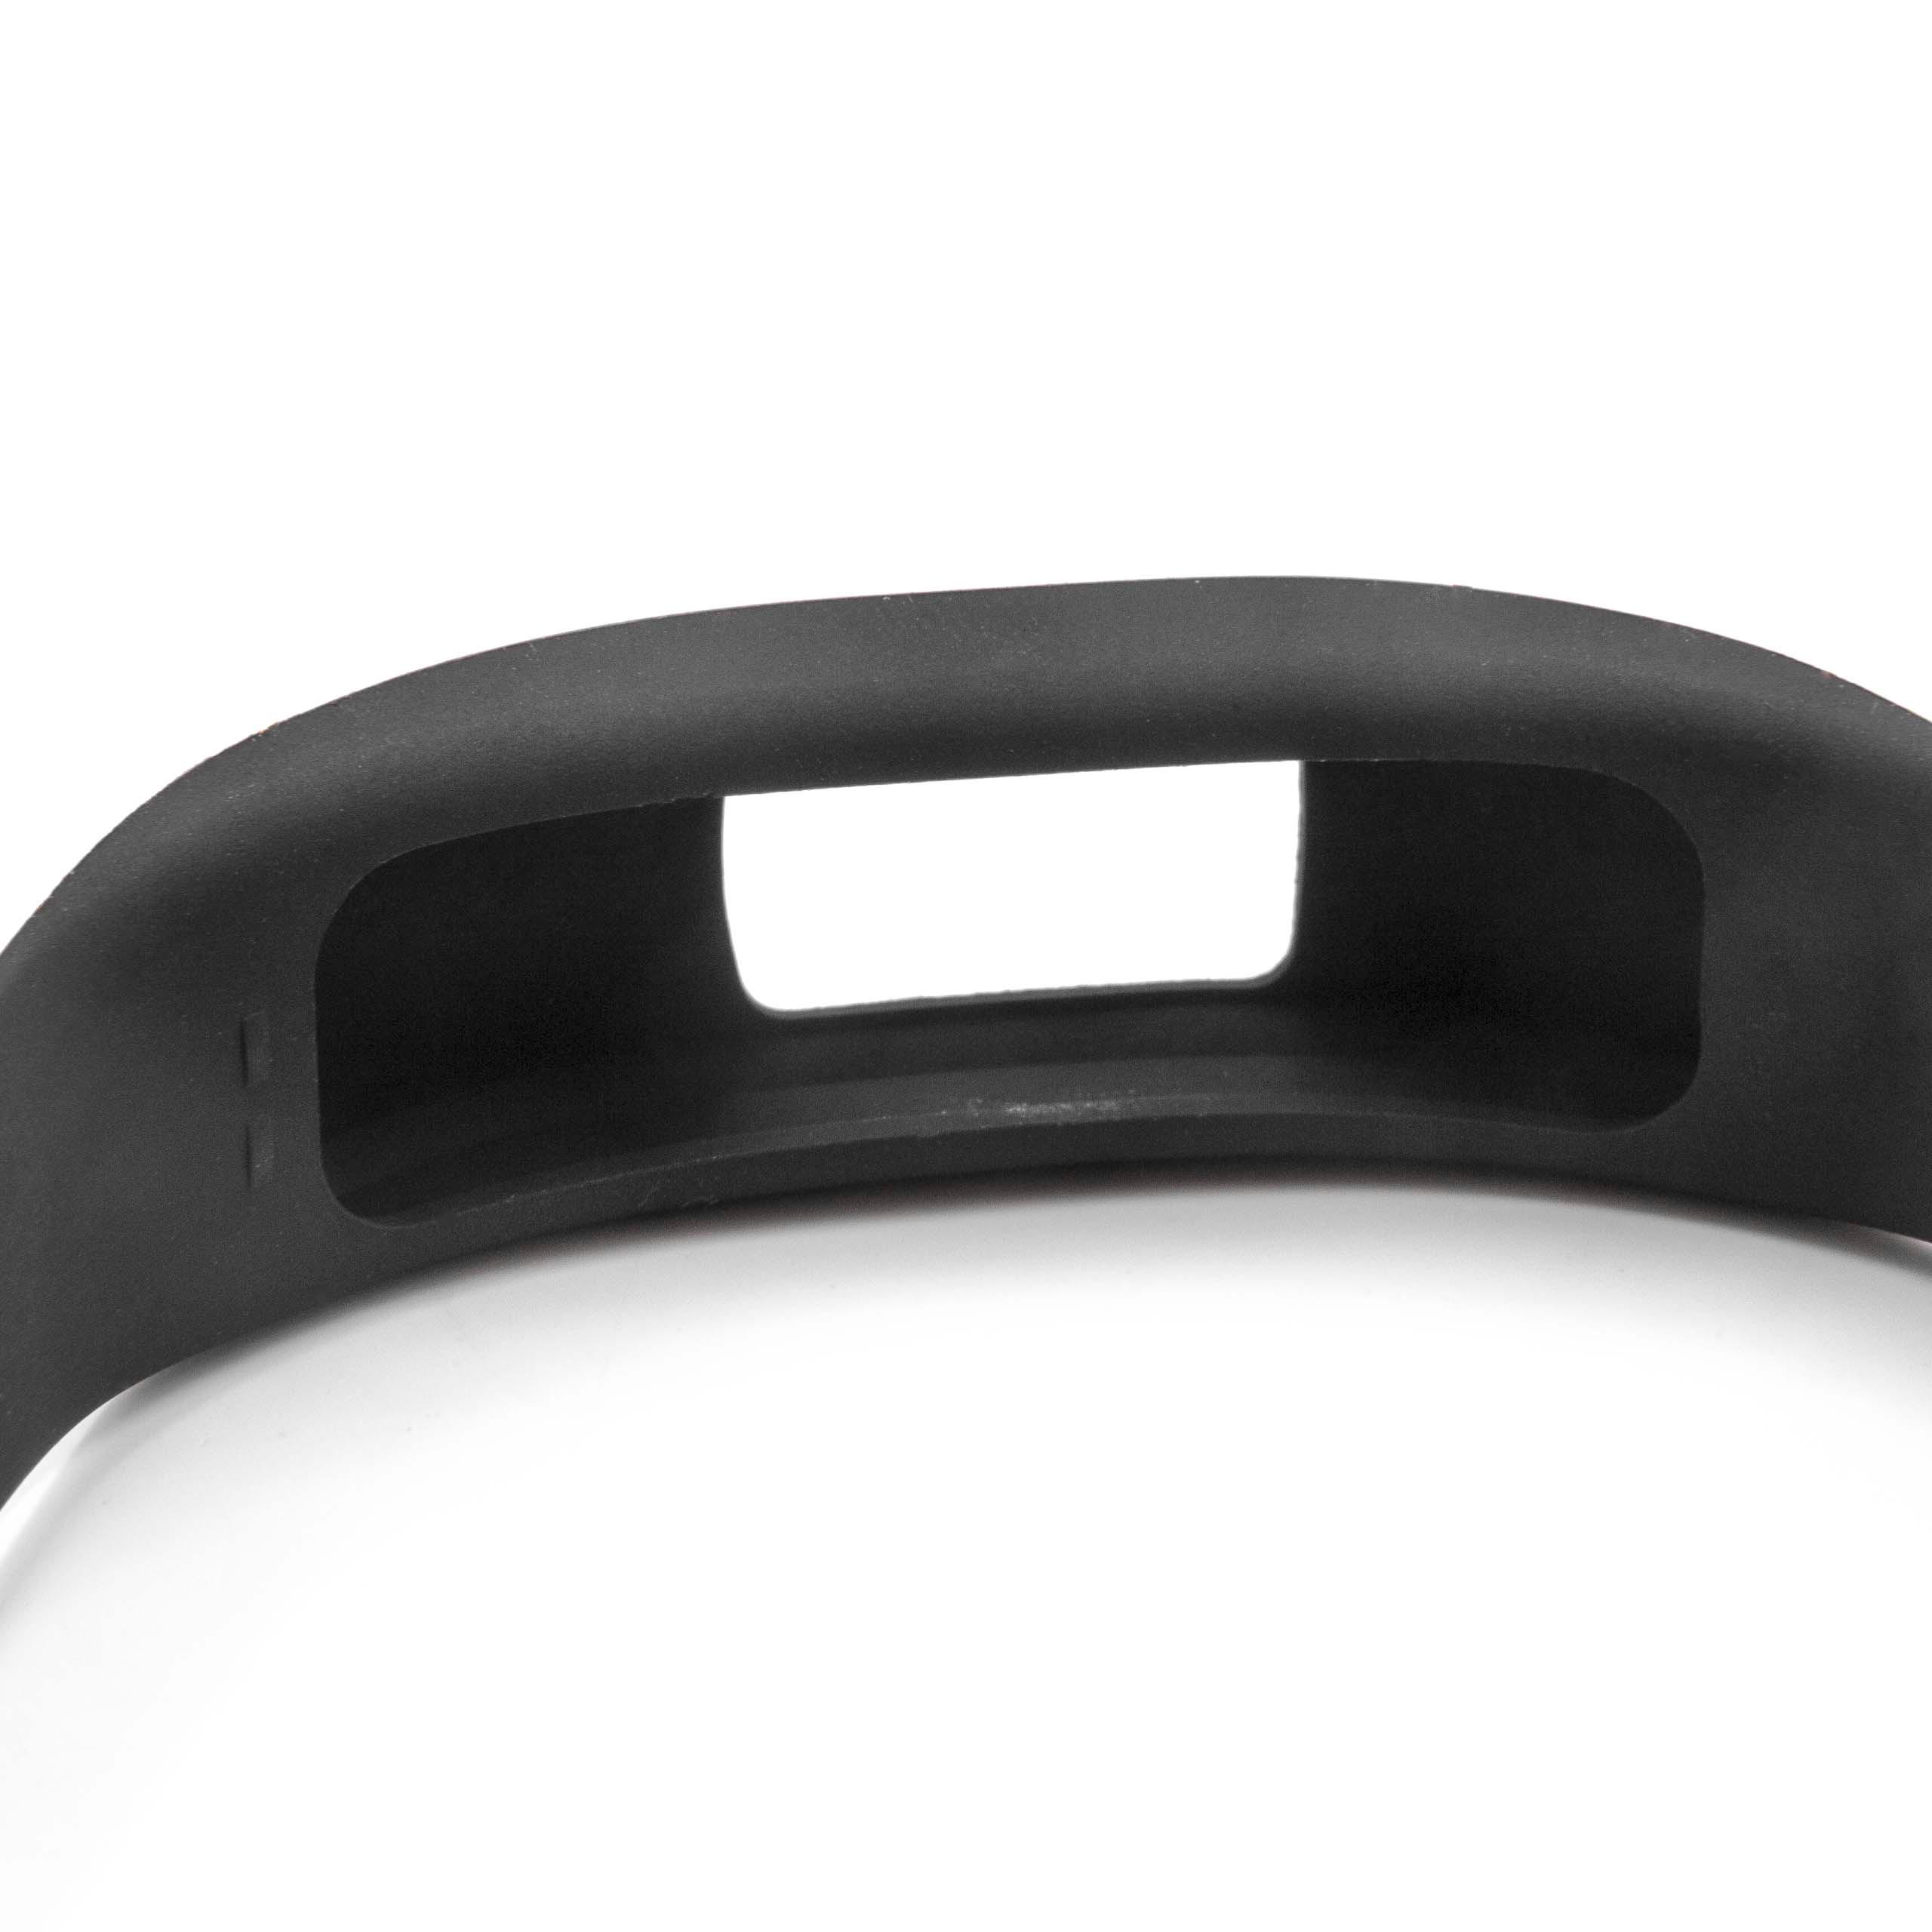 Armband für Garmin Vivofit Smartwatch - 23 cm lang, 18mm breit, Silikon, schwarz